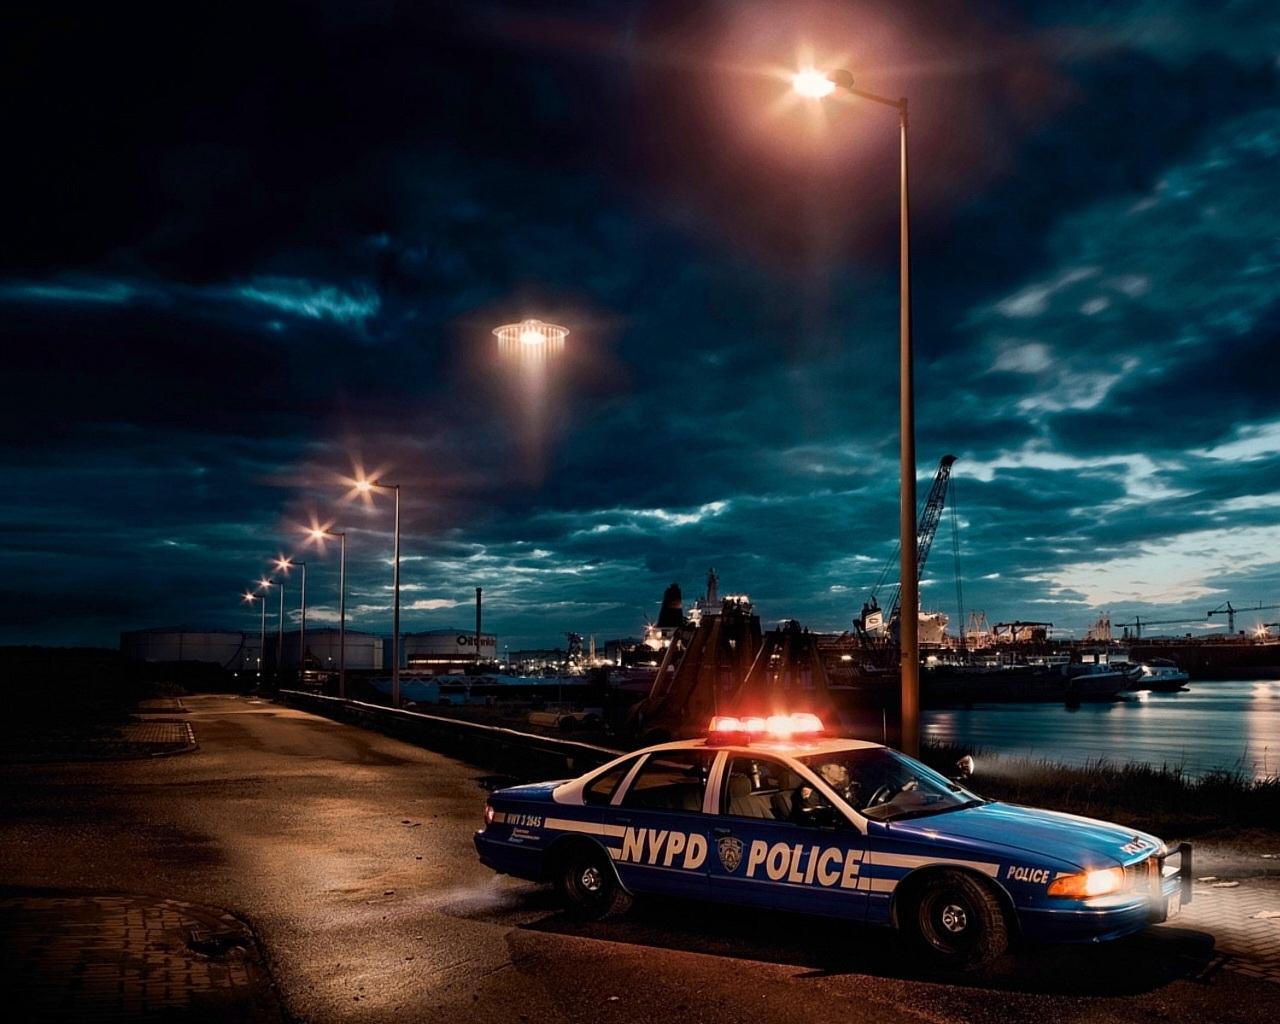 Wallpaper Police Night automobile Street lights